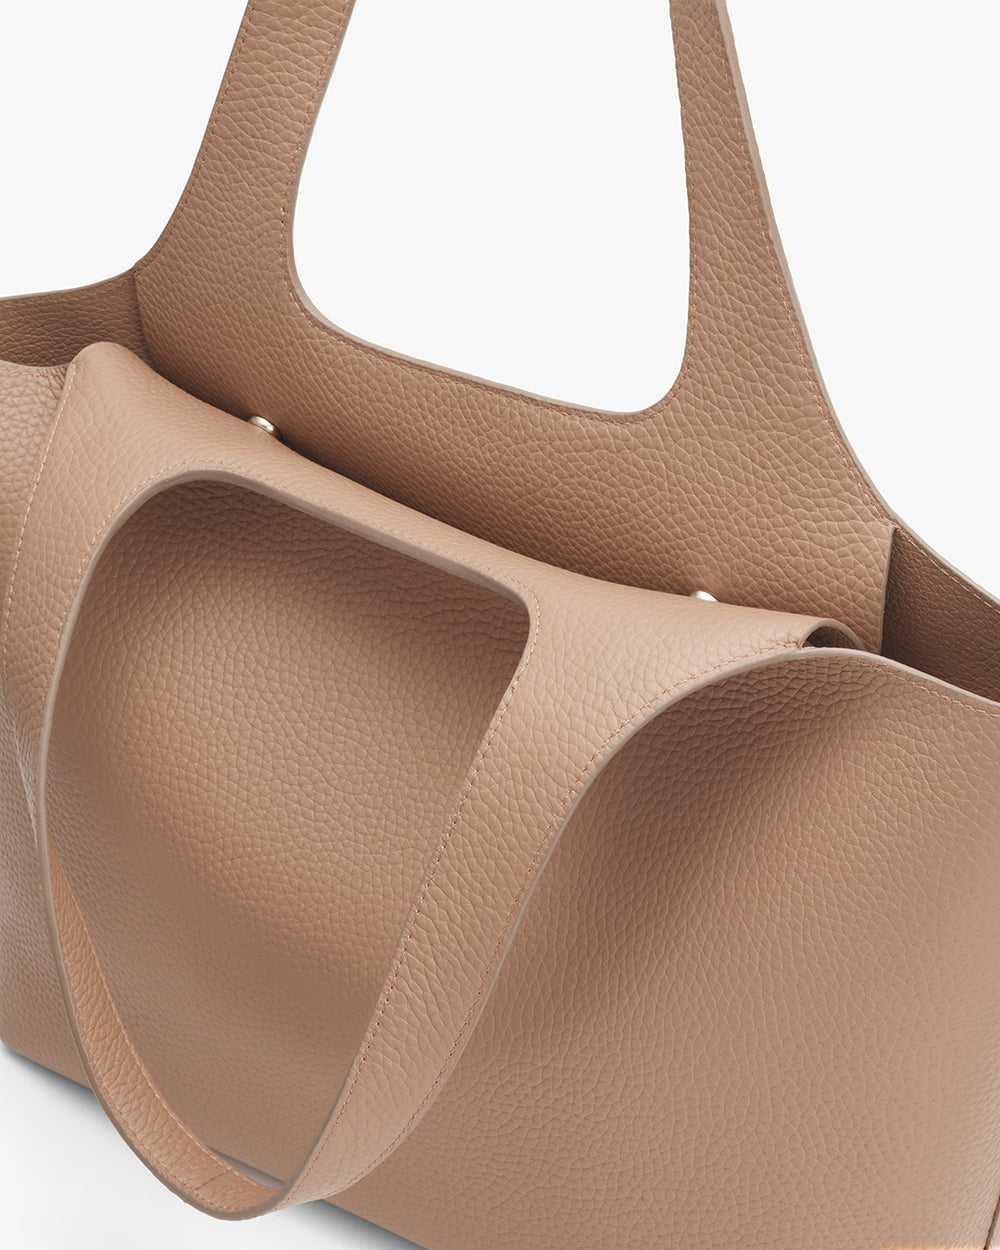 Close-up view of a textured handbag with handles.